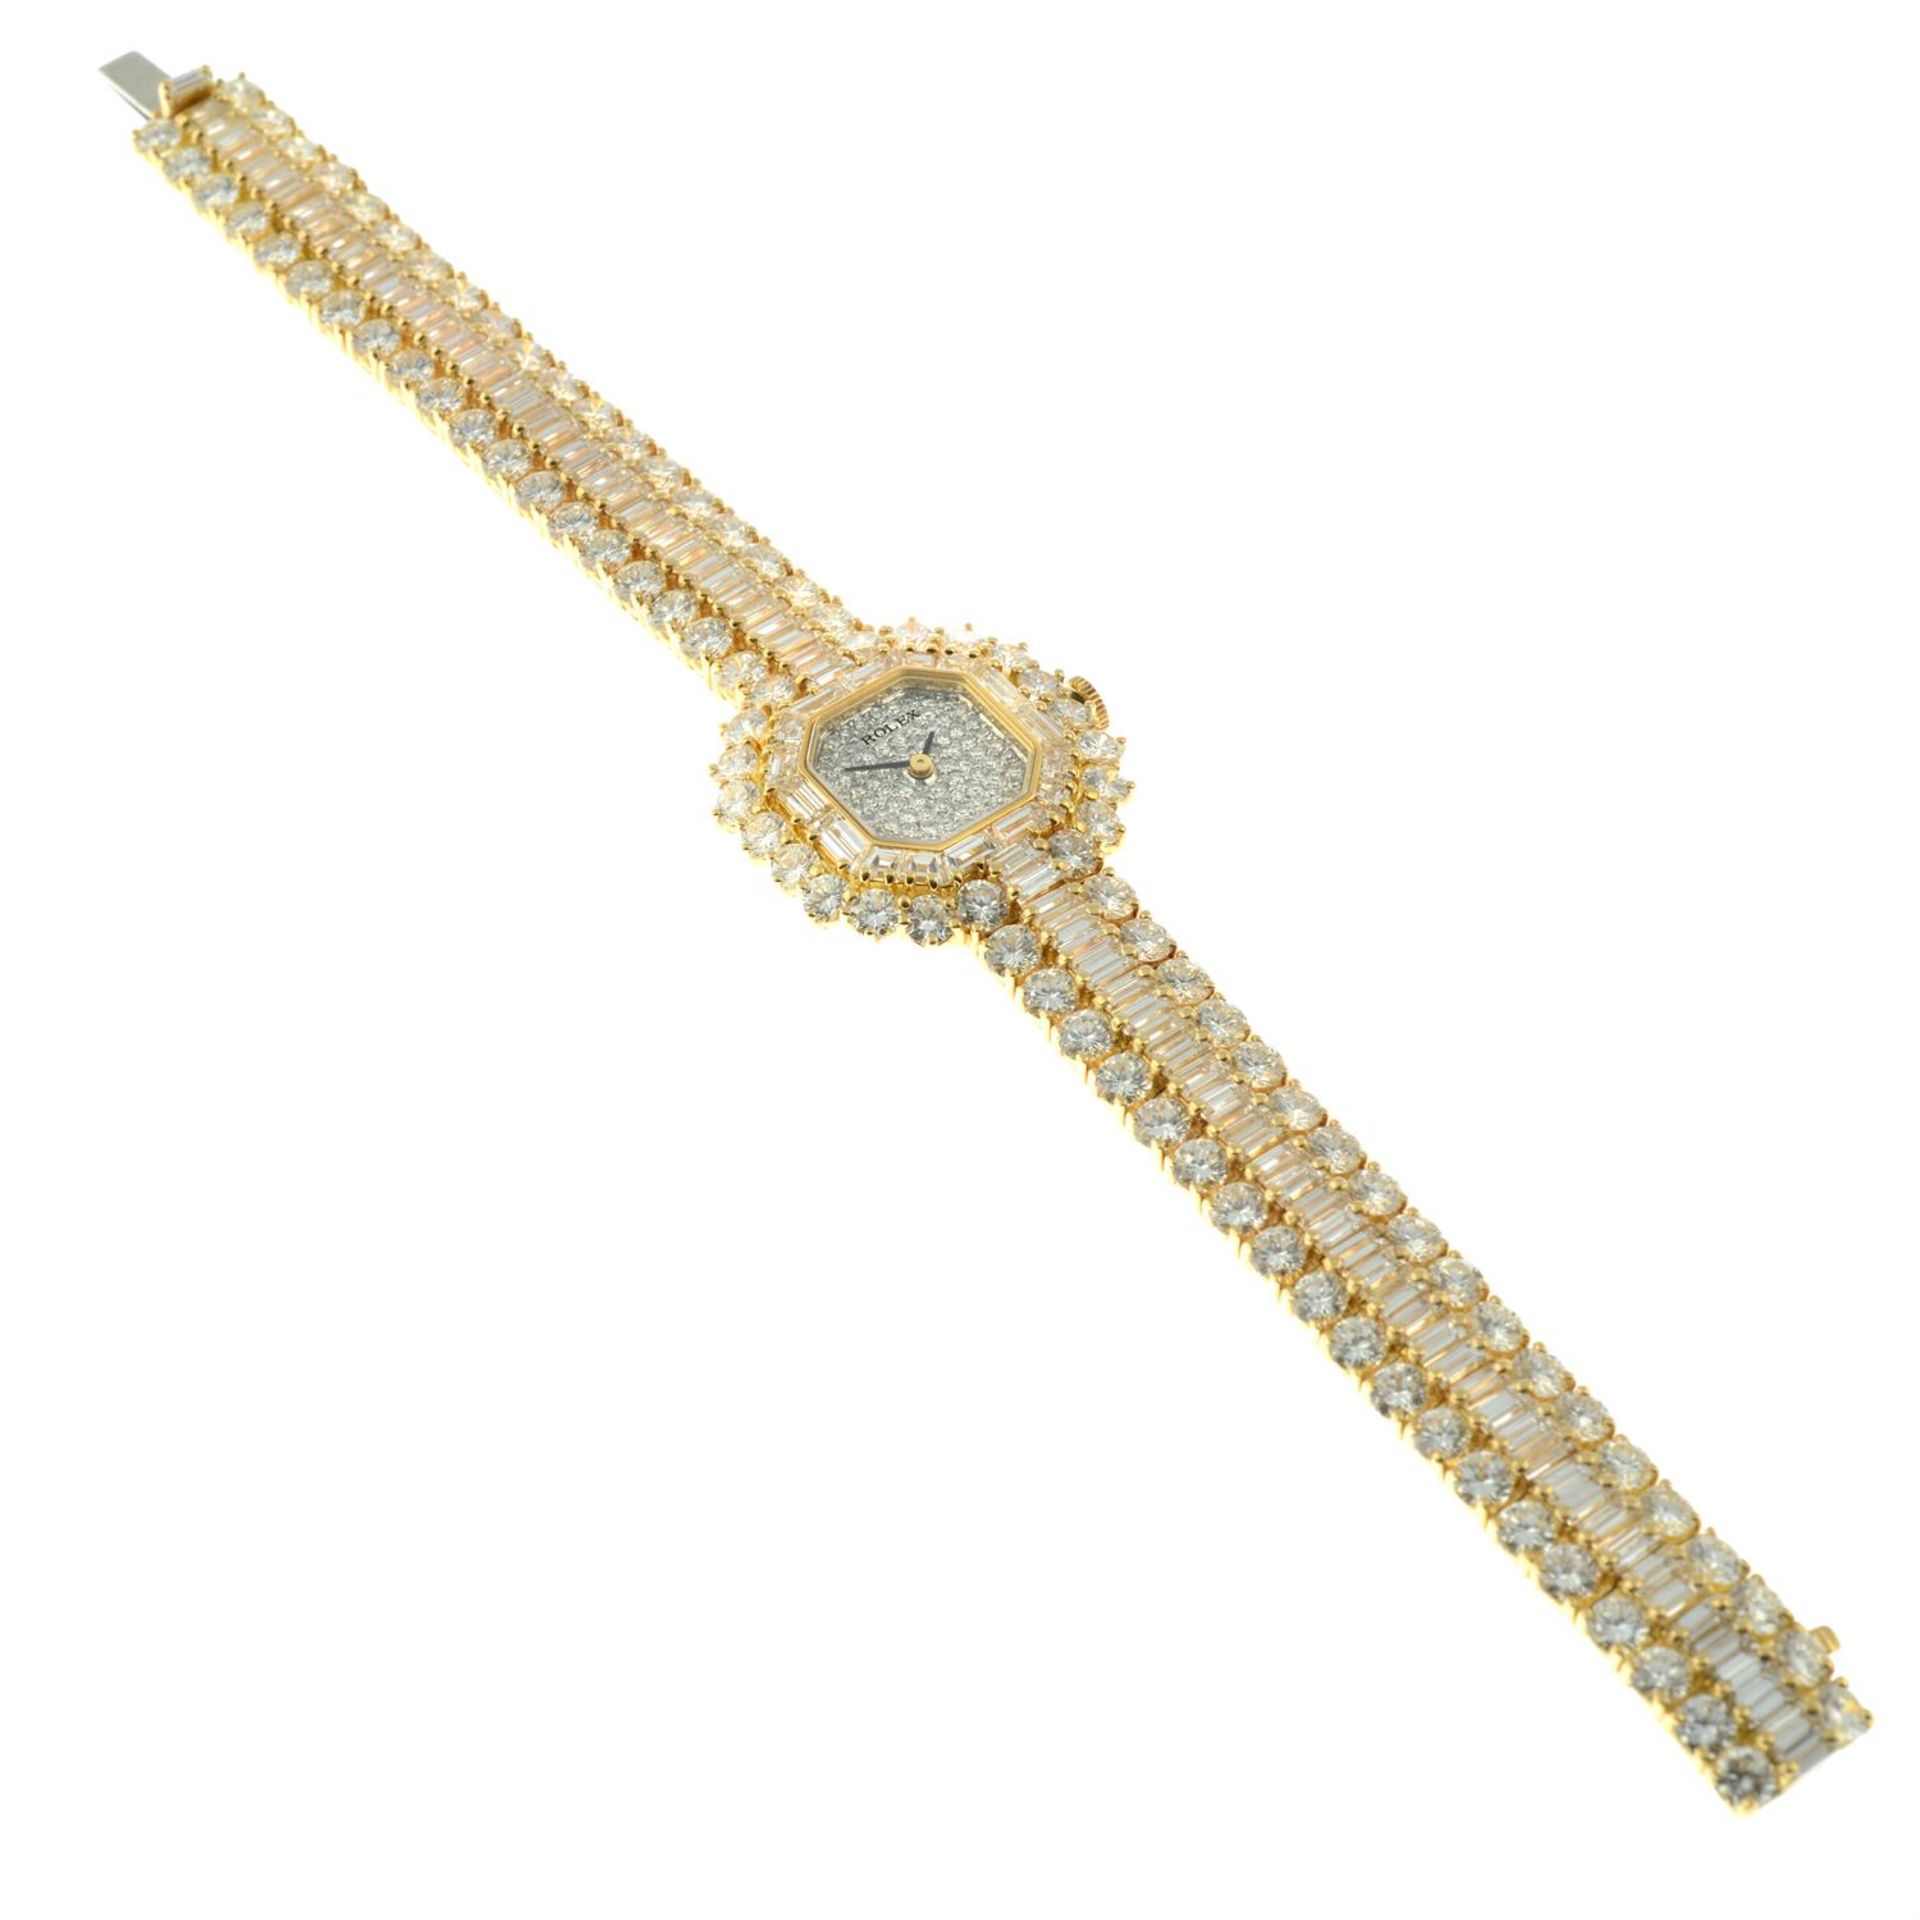 An 18ct gold vari-shape diamond watch, by Rolex. - Image 3 of 4